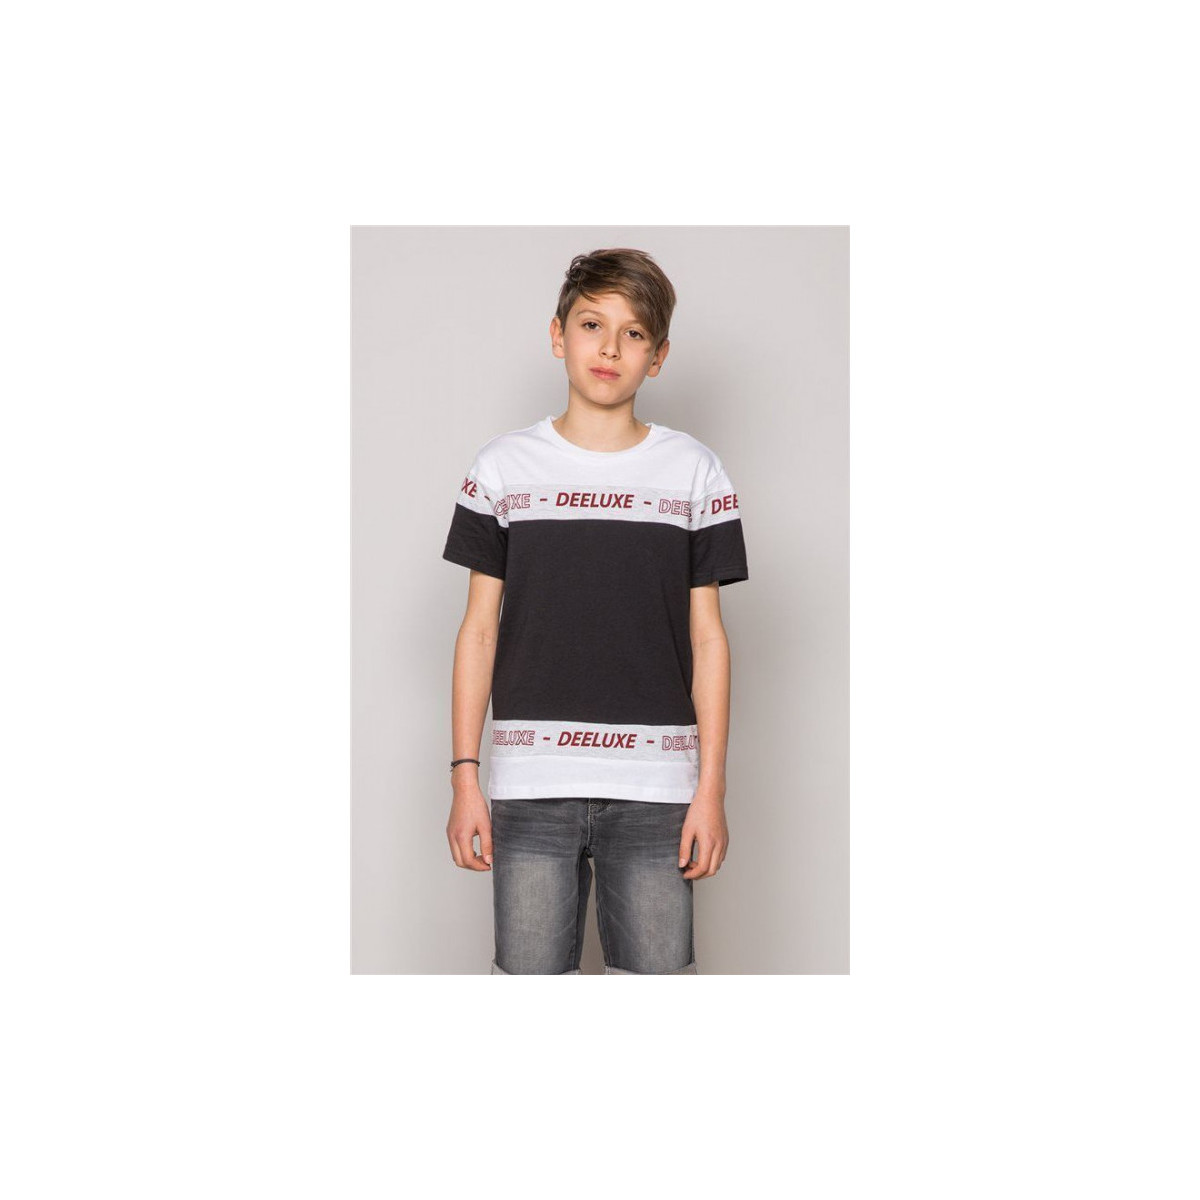 Deeluxe Gris Tee-shirt junior PERSONAL gris/noir/blanc - 10 ANS gMXE1iM8